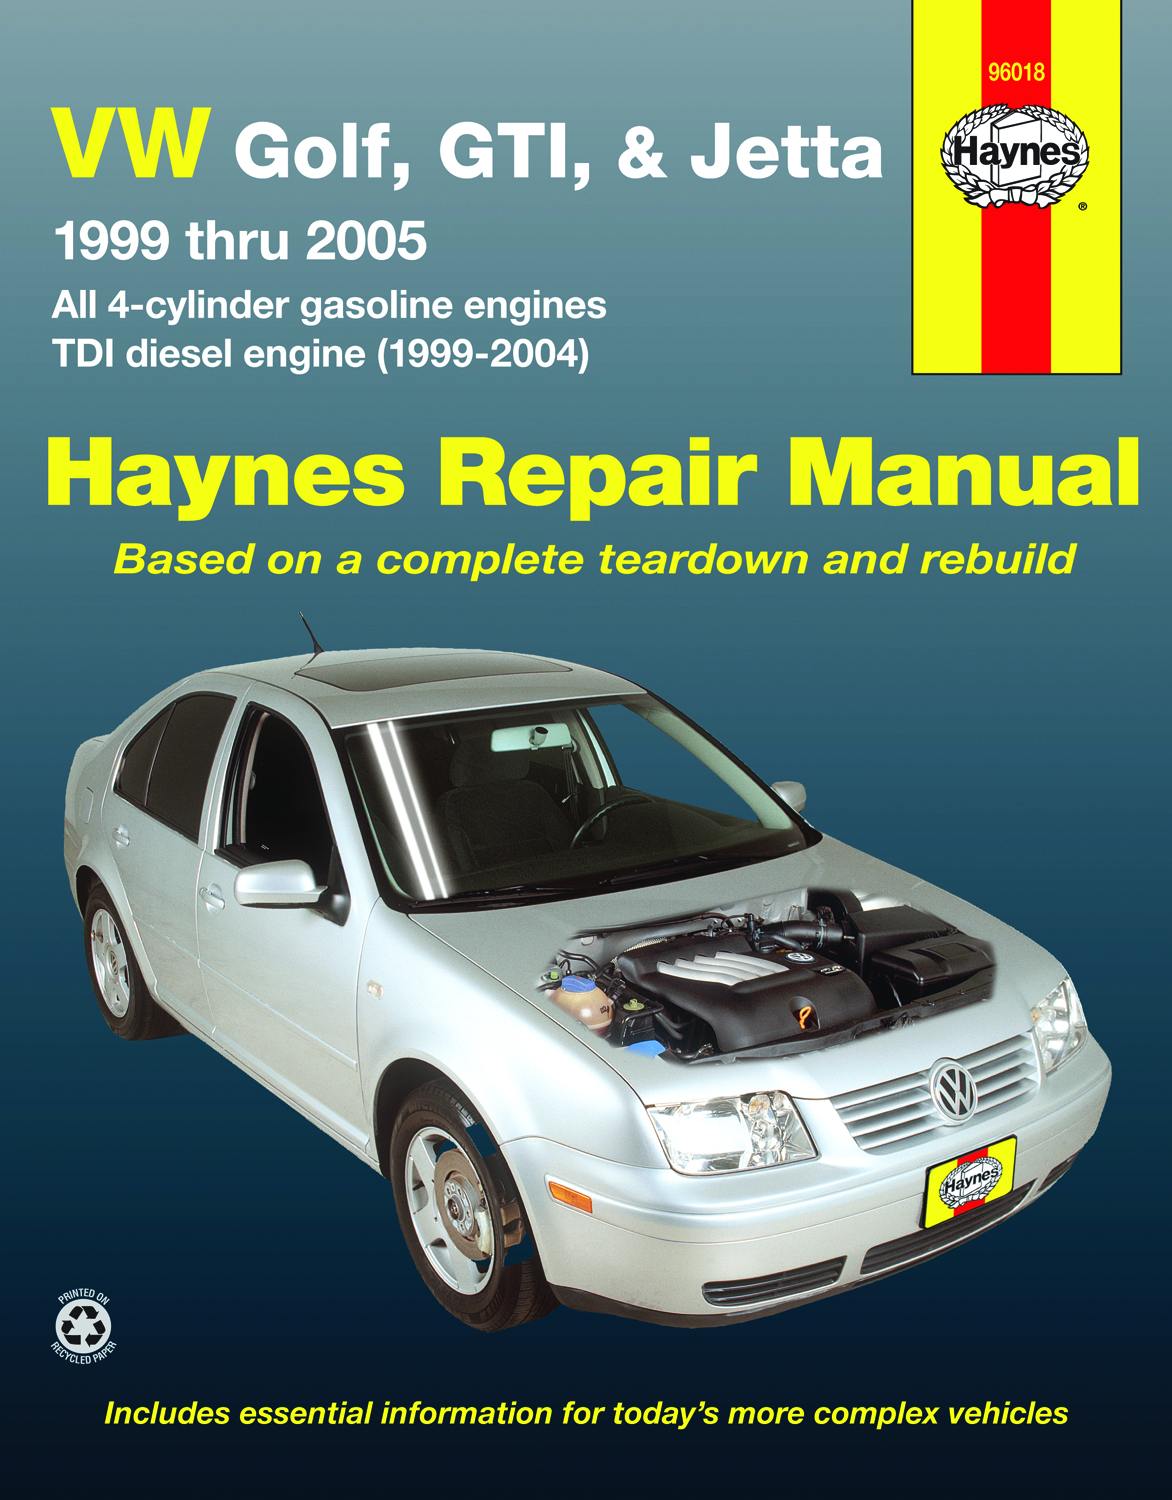 Service manual [Haynes Manual For Volkswagen Golf] - Vw ...